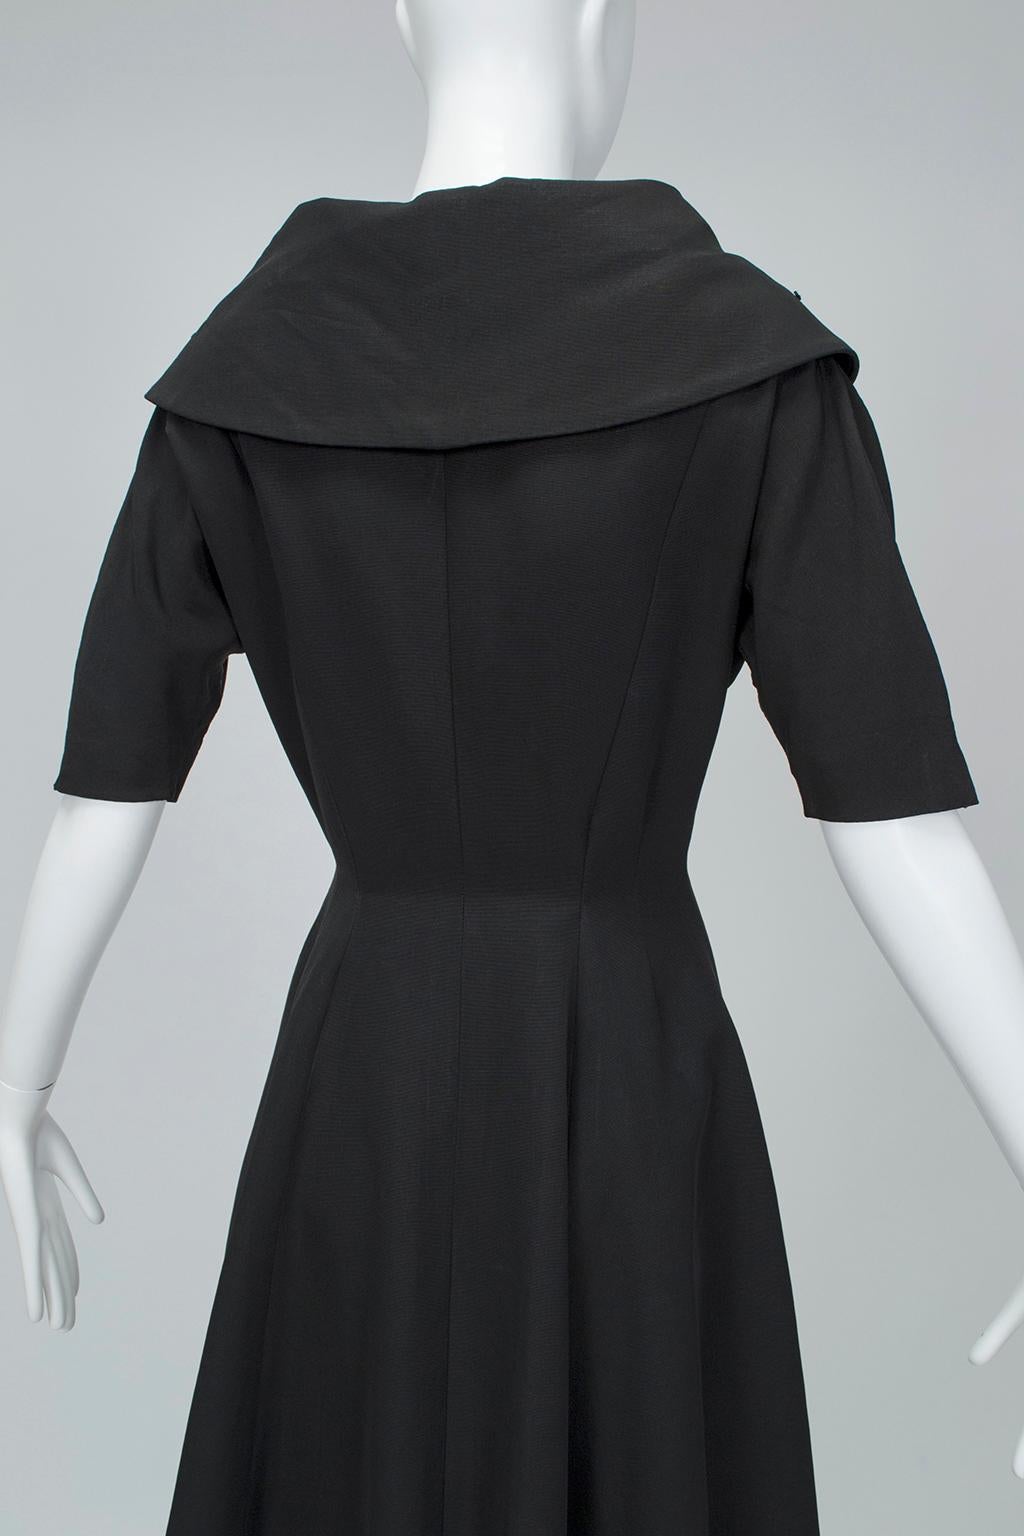 Women's New Look Black Heavyweight Faille Beaded Portrait Collar Coat Dress - S, 1950s For Sale